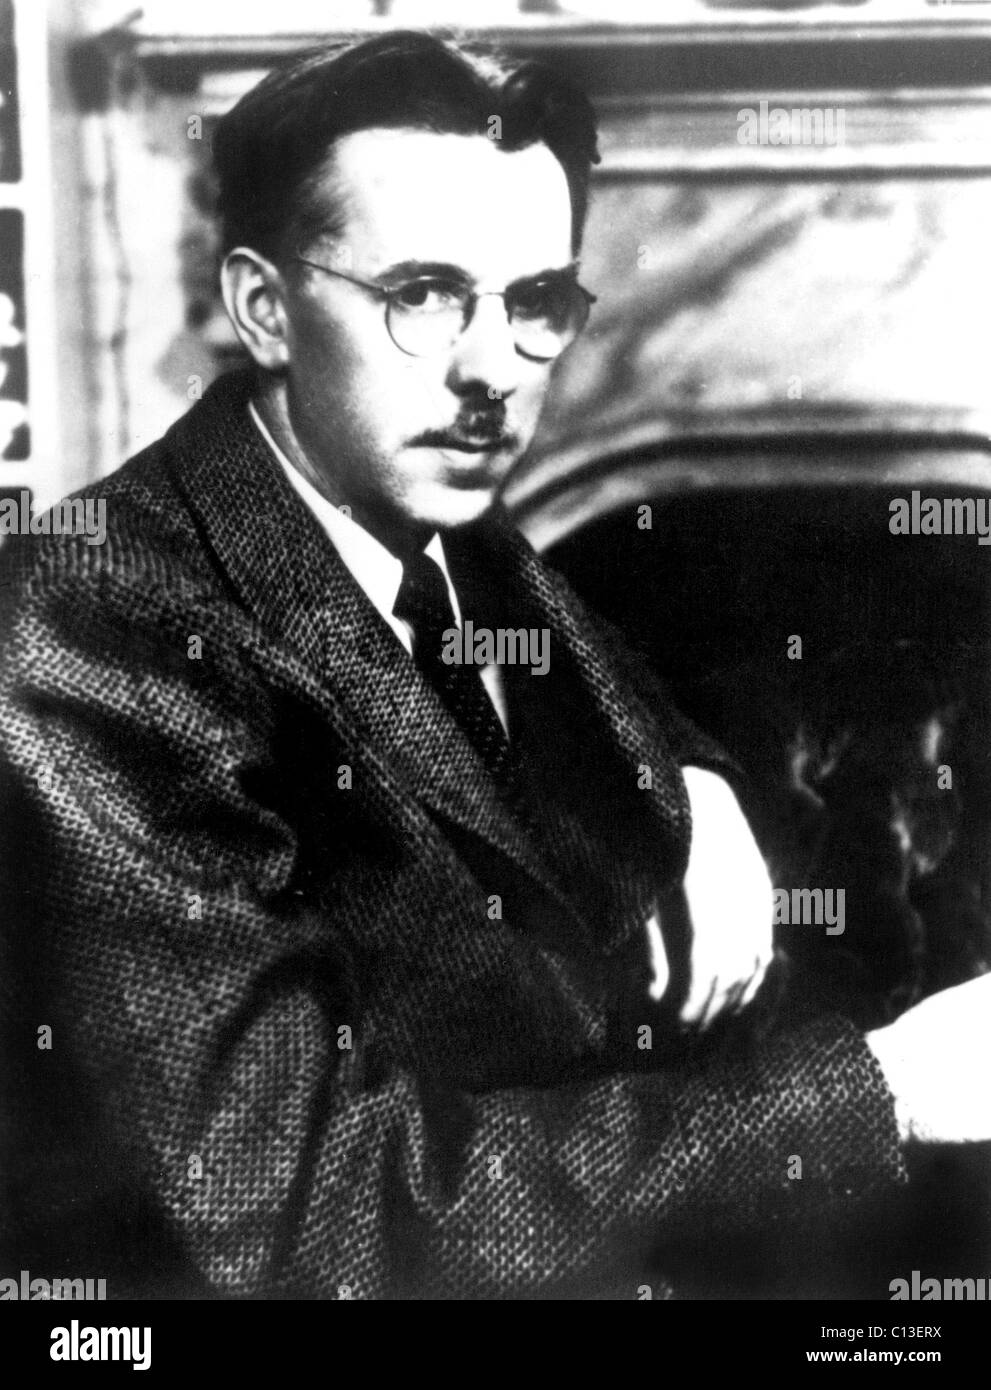 Escritor/autor JAMES THURBER, c. finales de 1930-principios de 1940 Foto de stock